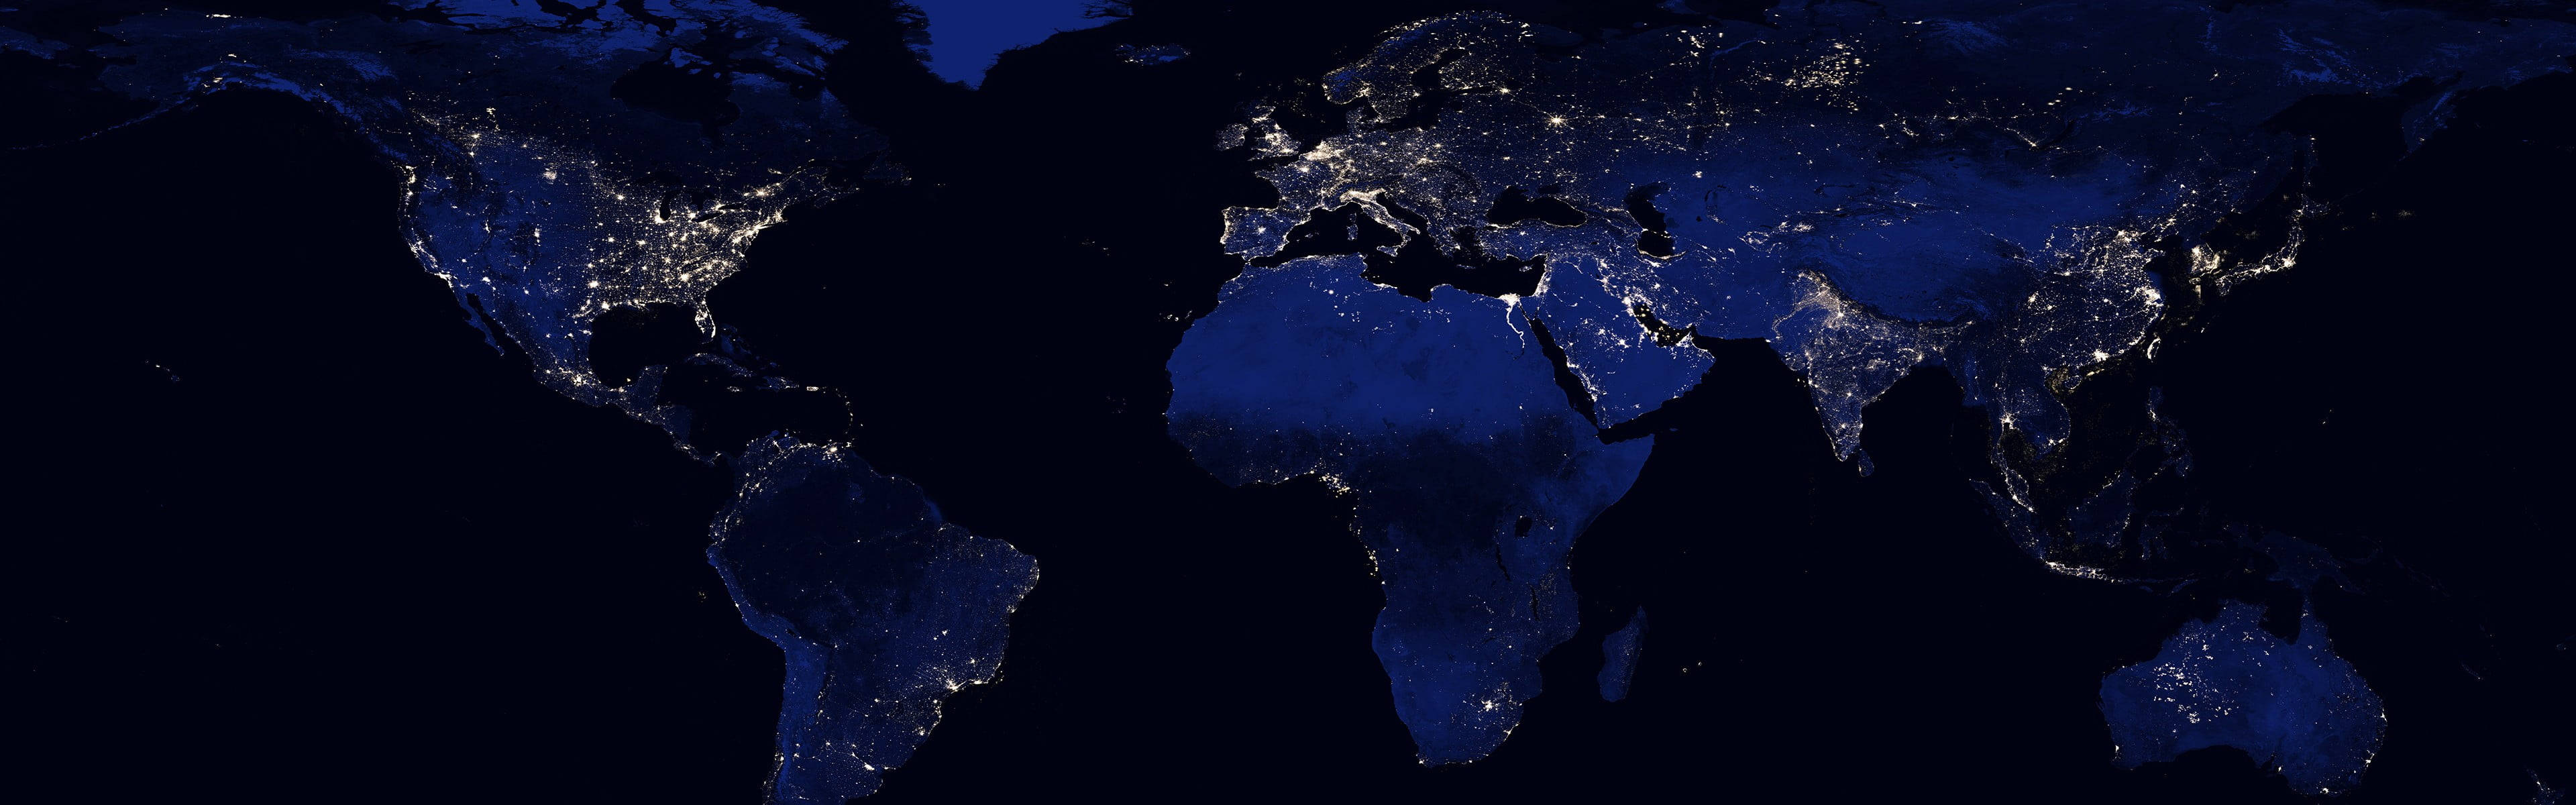 World Map 4k At Night Wallpaper